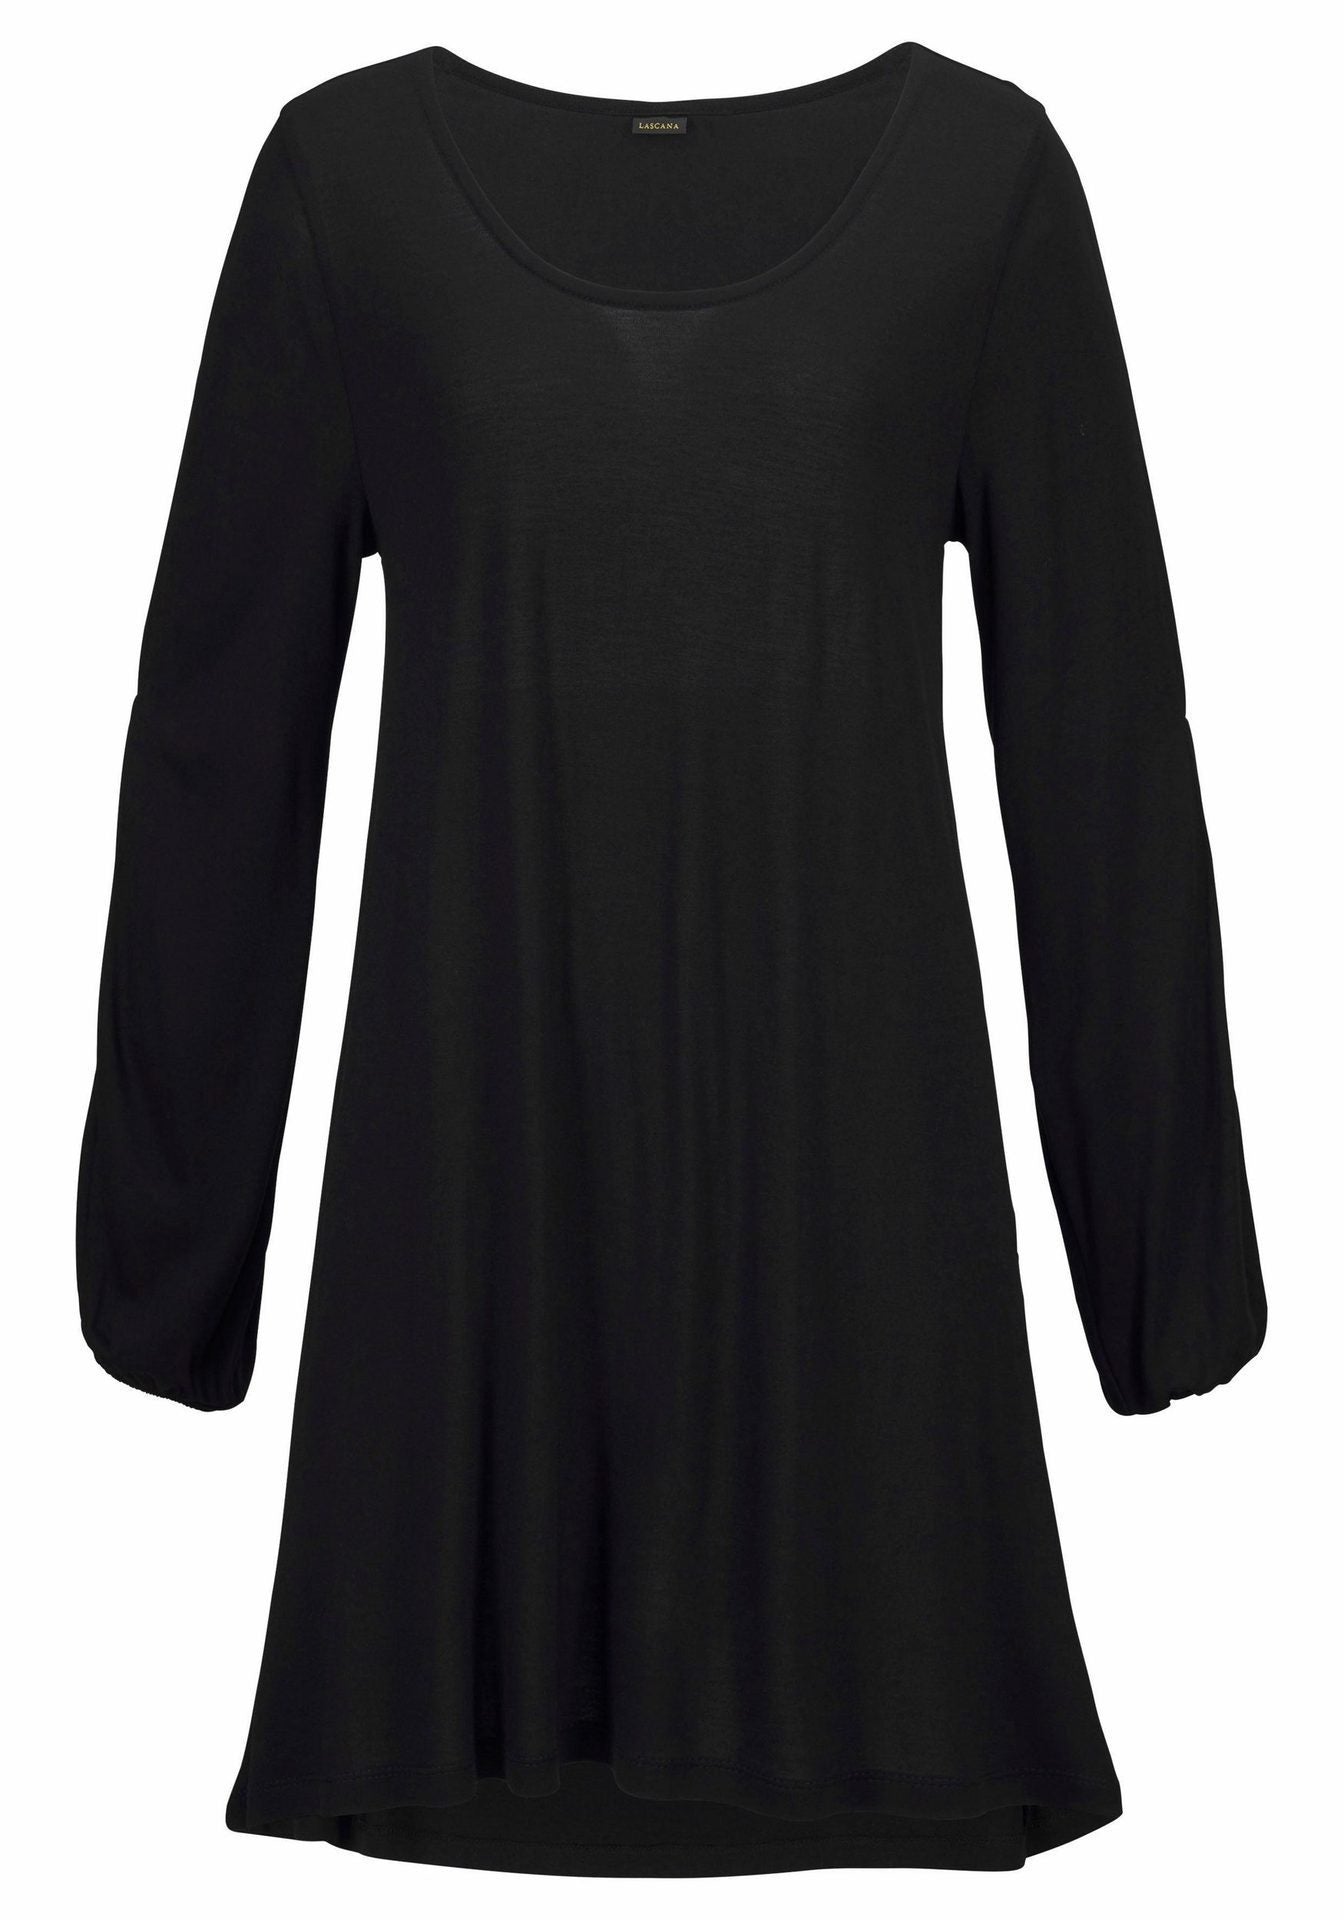 Messelling99 Casual Short Black Dress Swing Long Sleeve Slit Beach Mini Dress-Mini Dresses-Free Shipping at meselling99